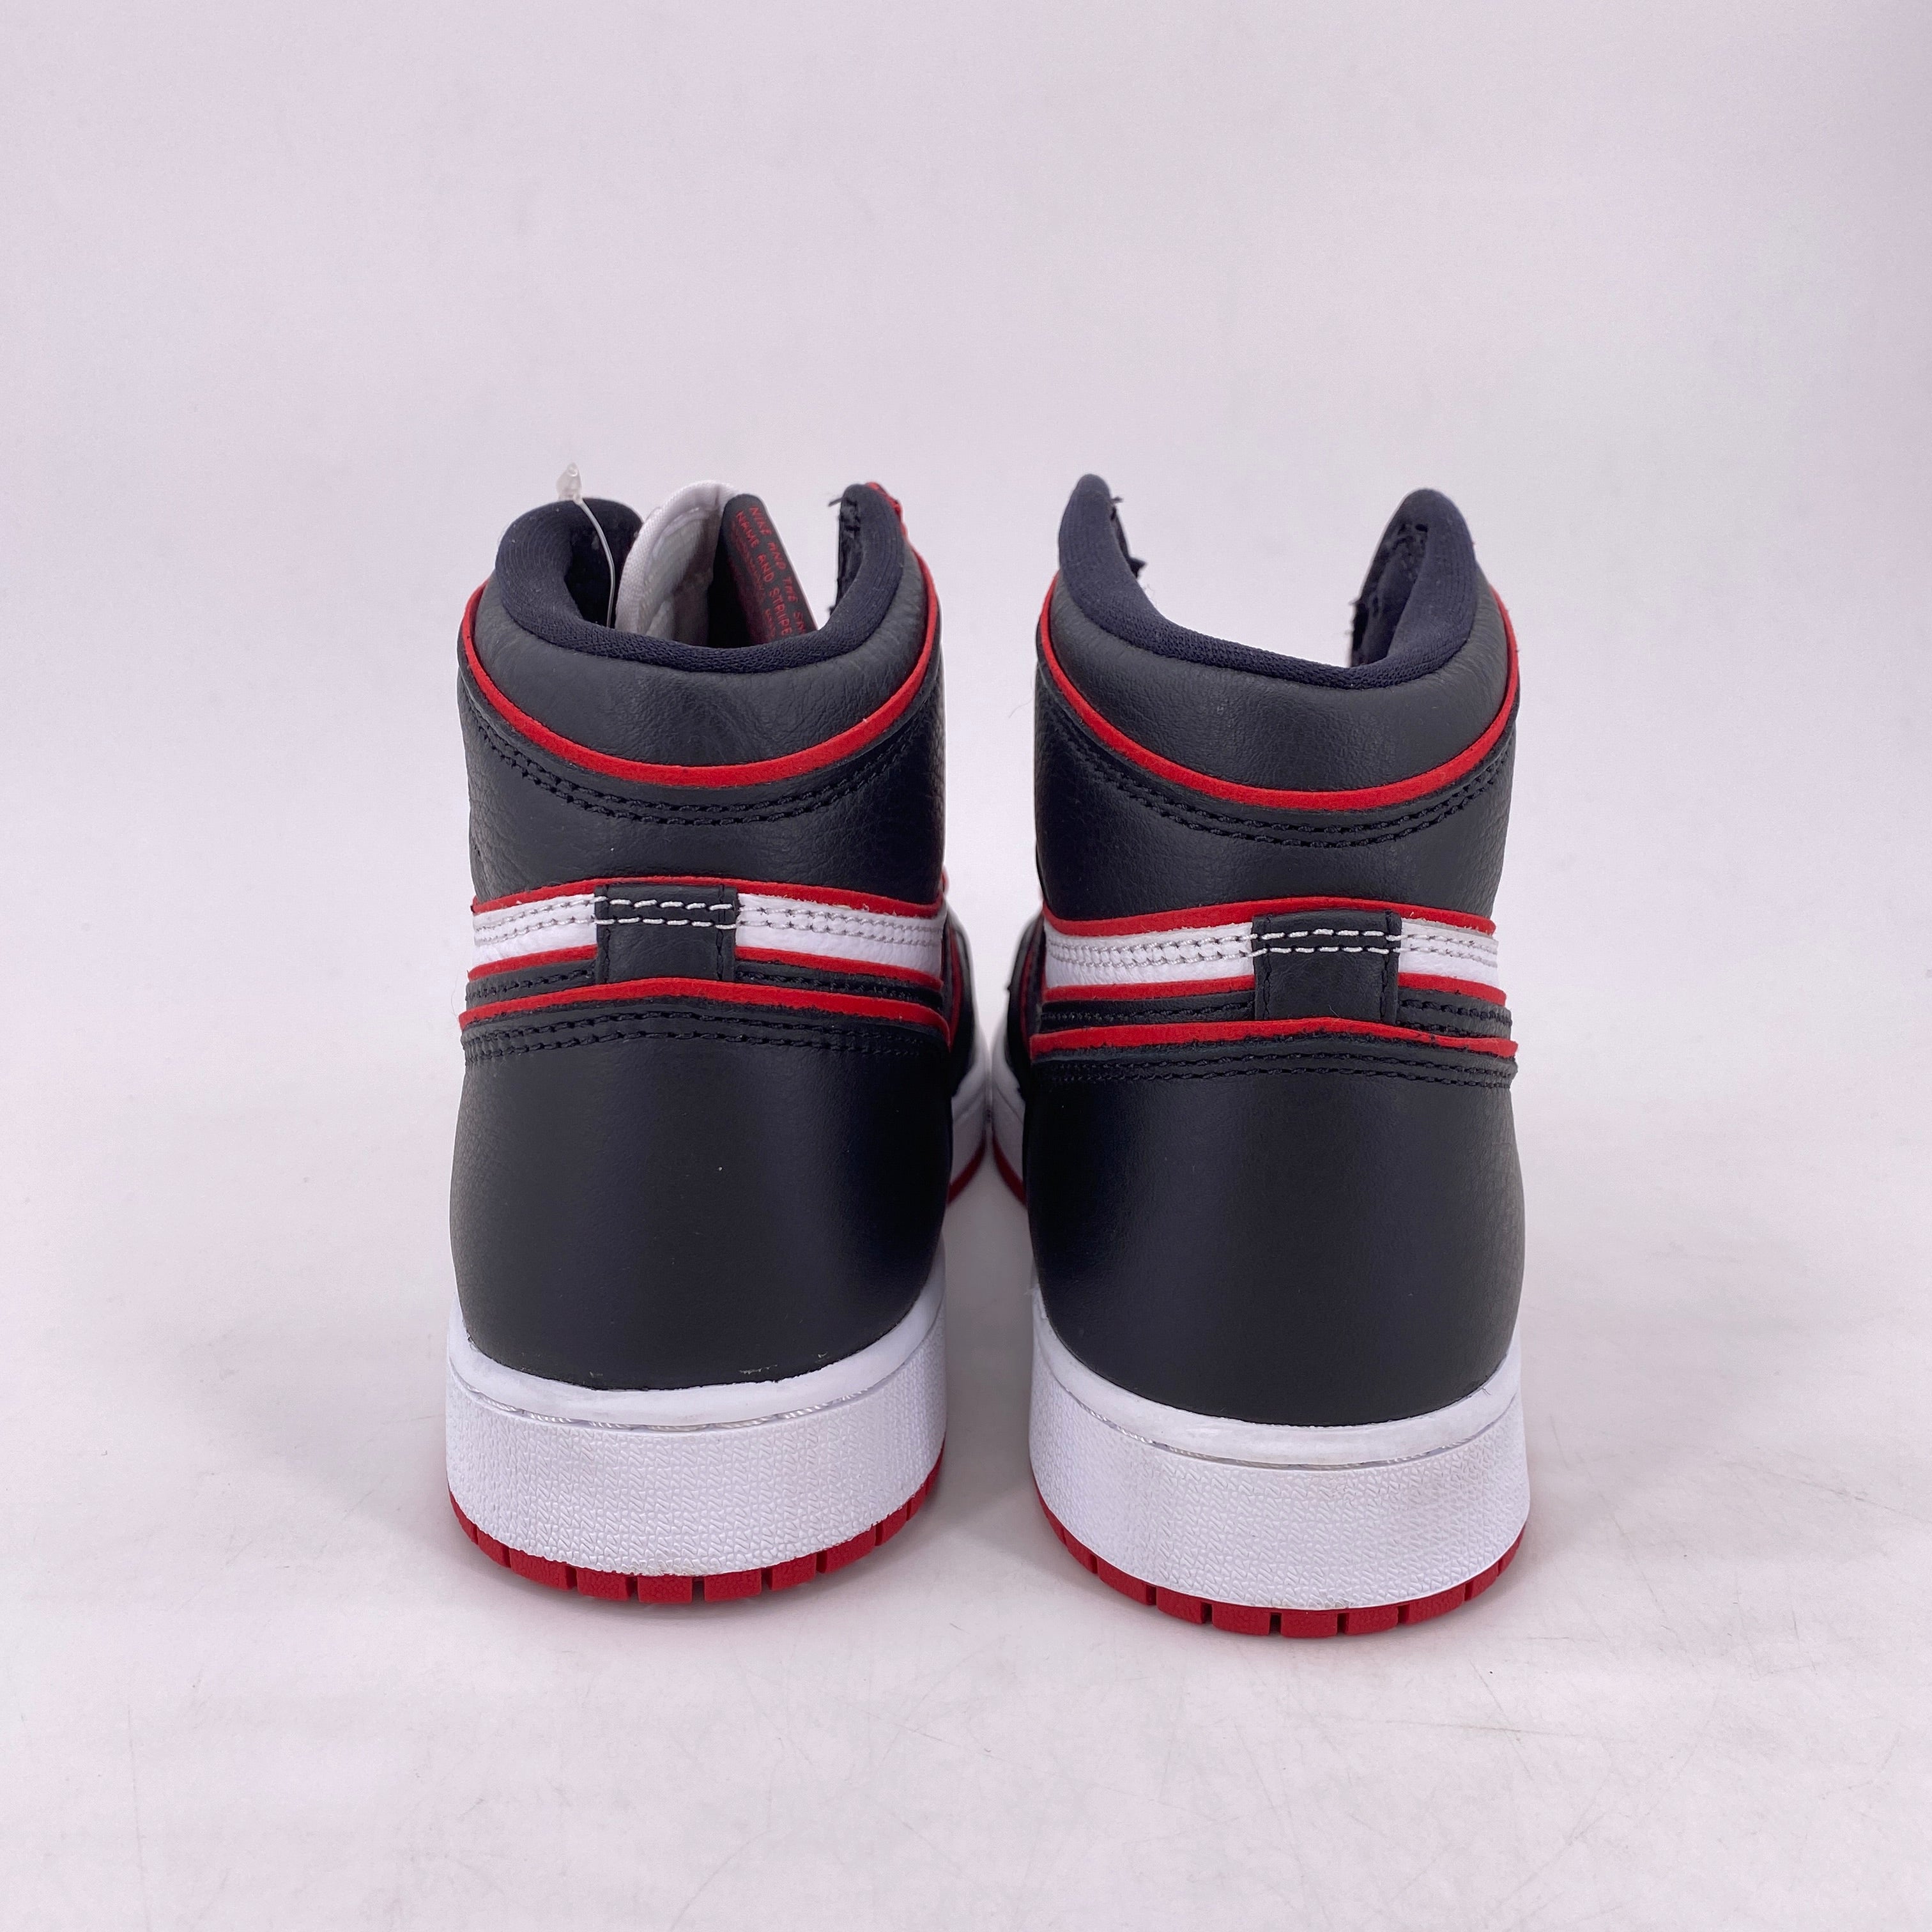 Air Jordan (GS) 1 Retro High OG "Bloodline" 2019 New (Cond) Size 5Y